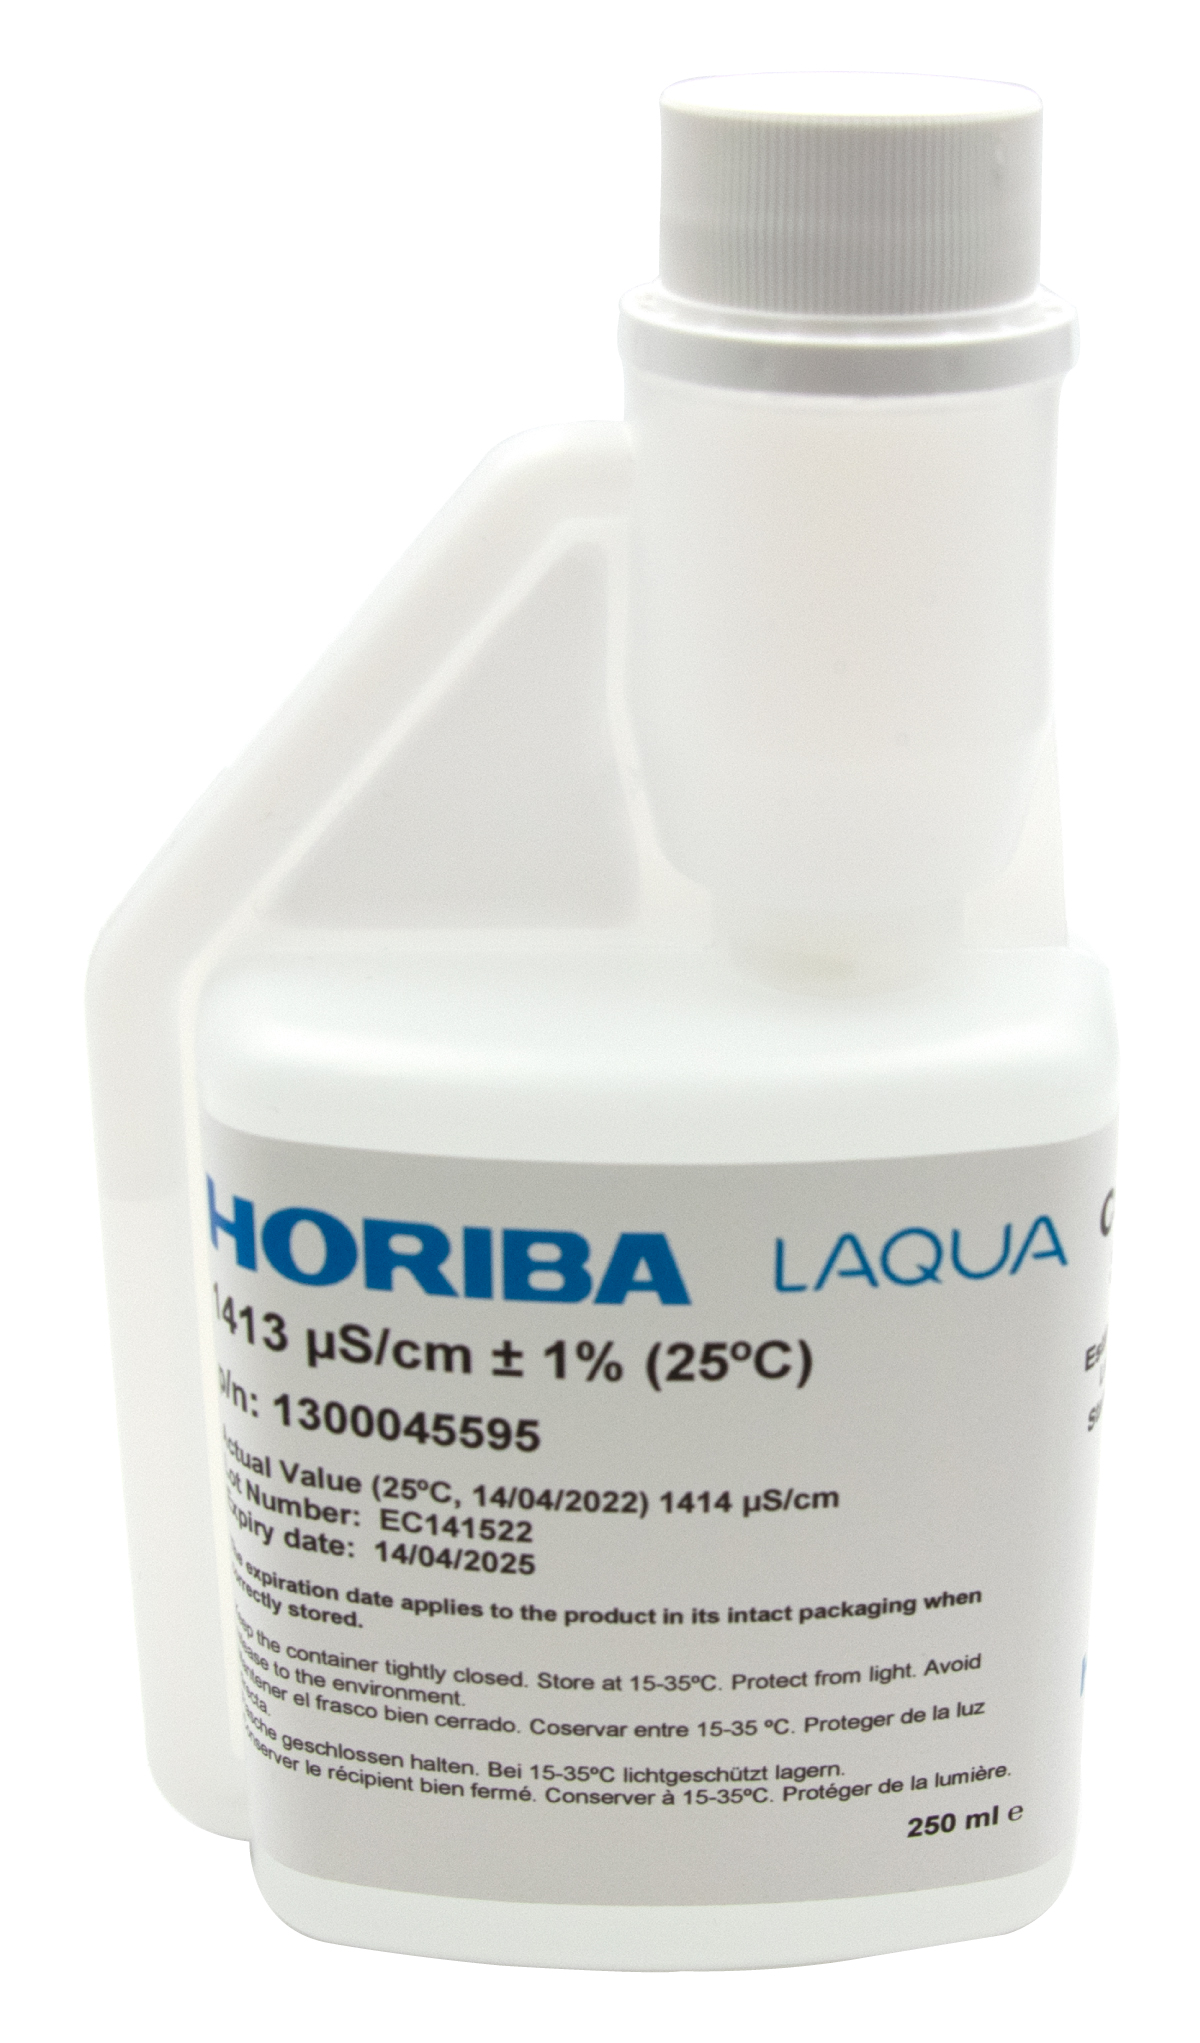 HORIBA 1413 μS/cm conductivity calibration solution 250ml (250-EC-1413)